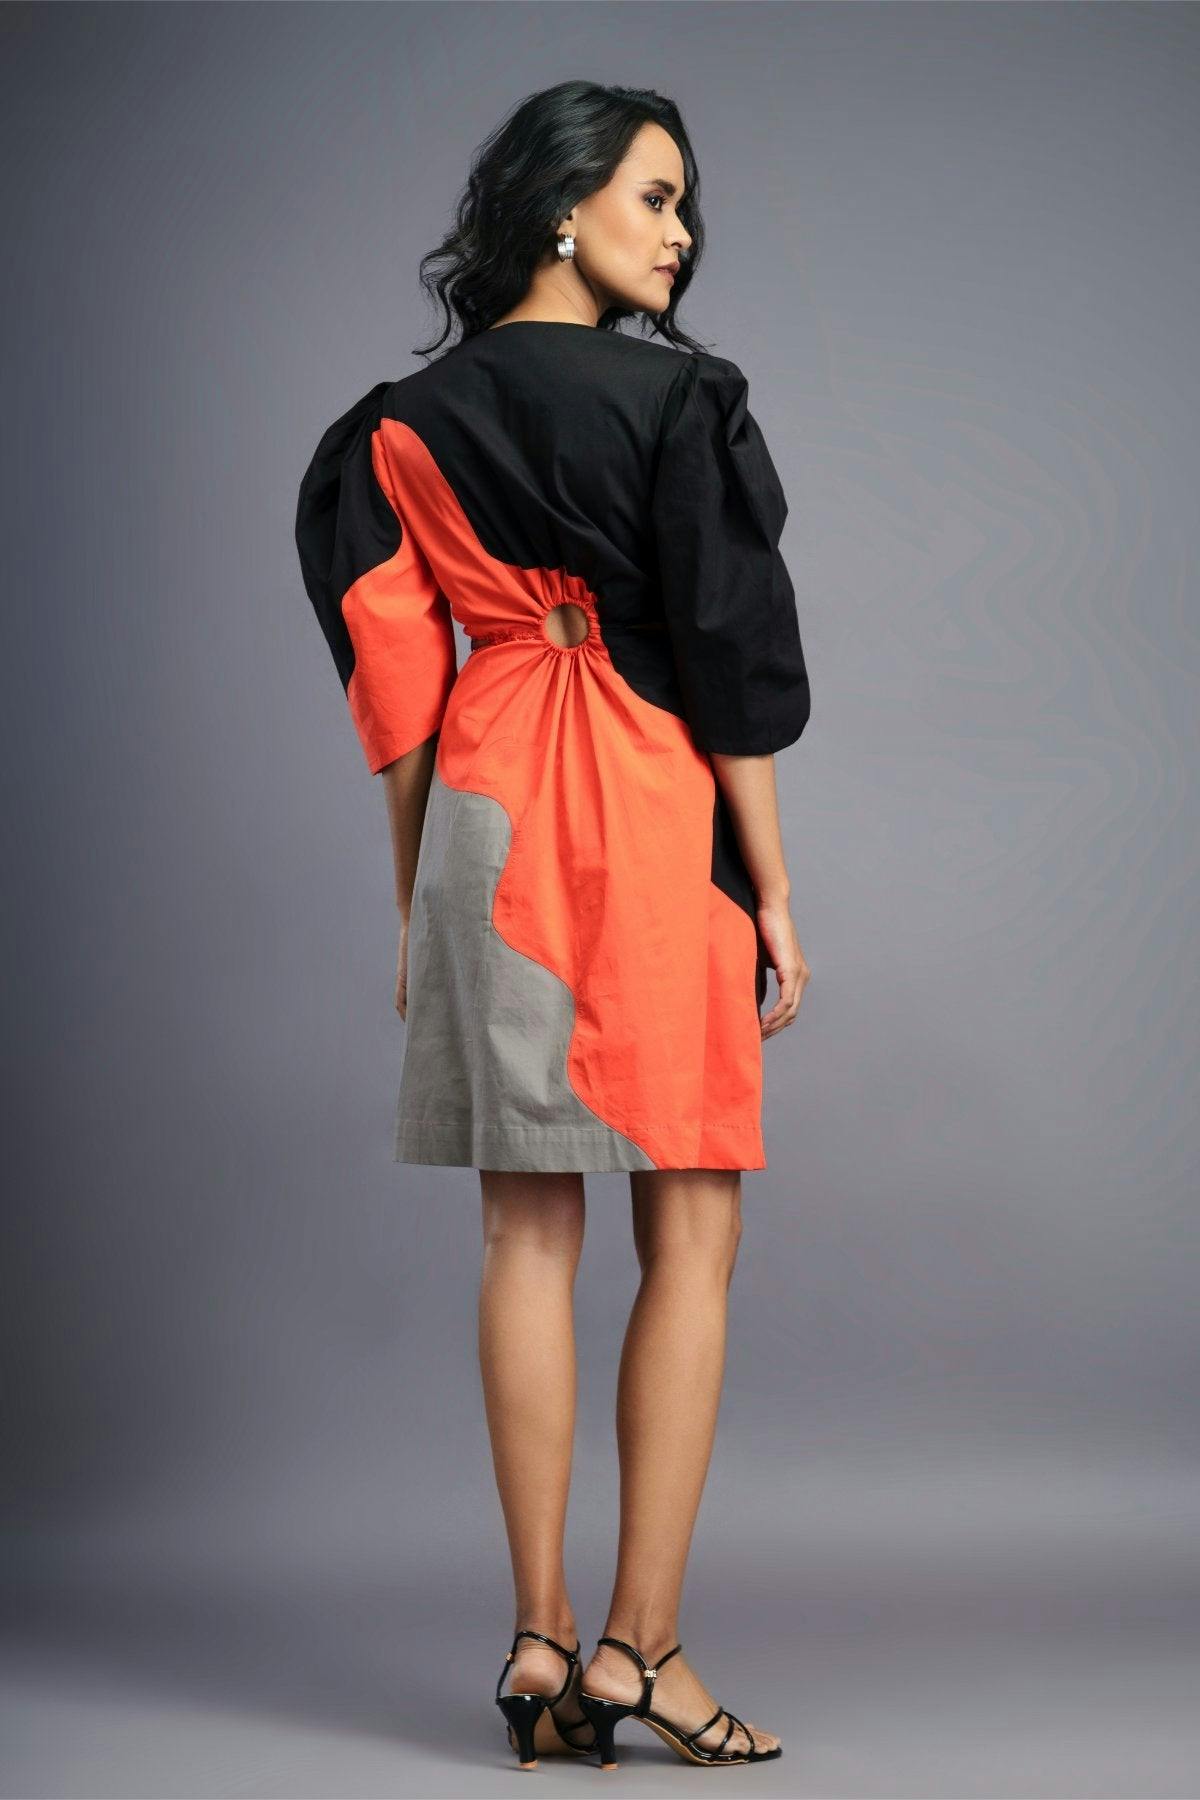 Thumbnail preview #1 for BB-1106-OG - Black Orange Cutout Dress